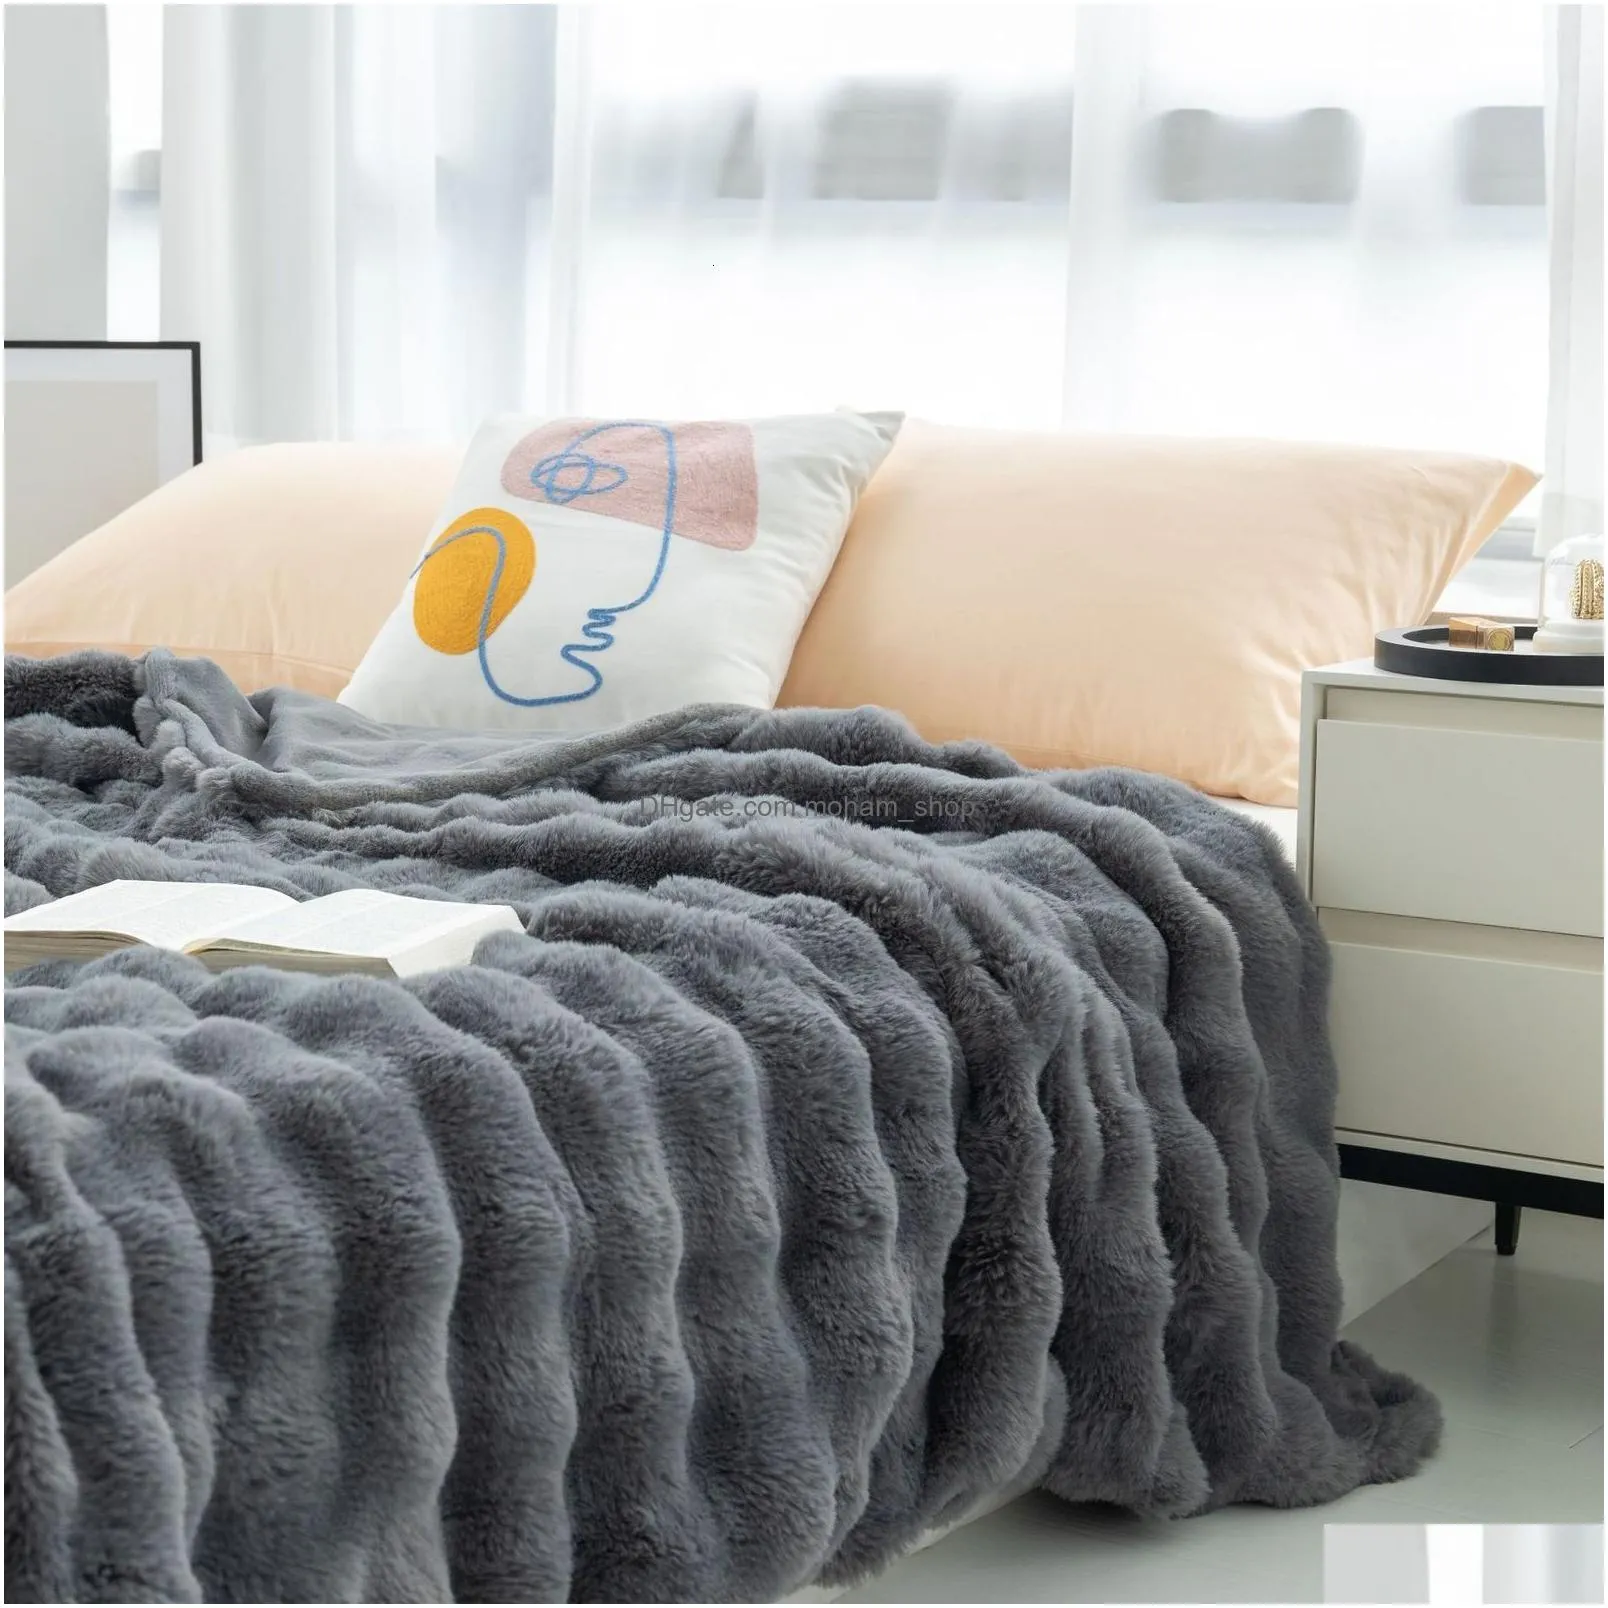 blankets imitation rabbit fur plush blanket winter warmth super comfortable bed luxury warm sofa cover high quality throw 231011